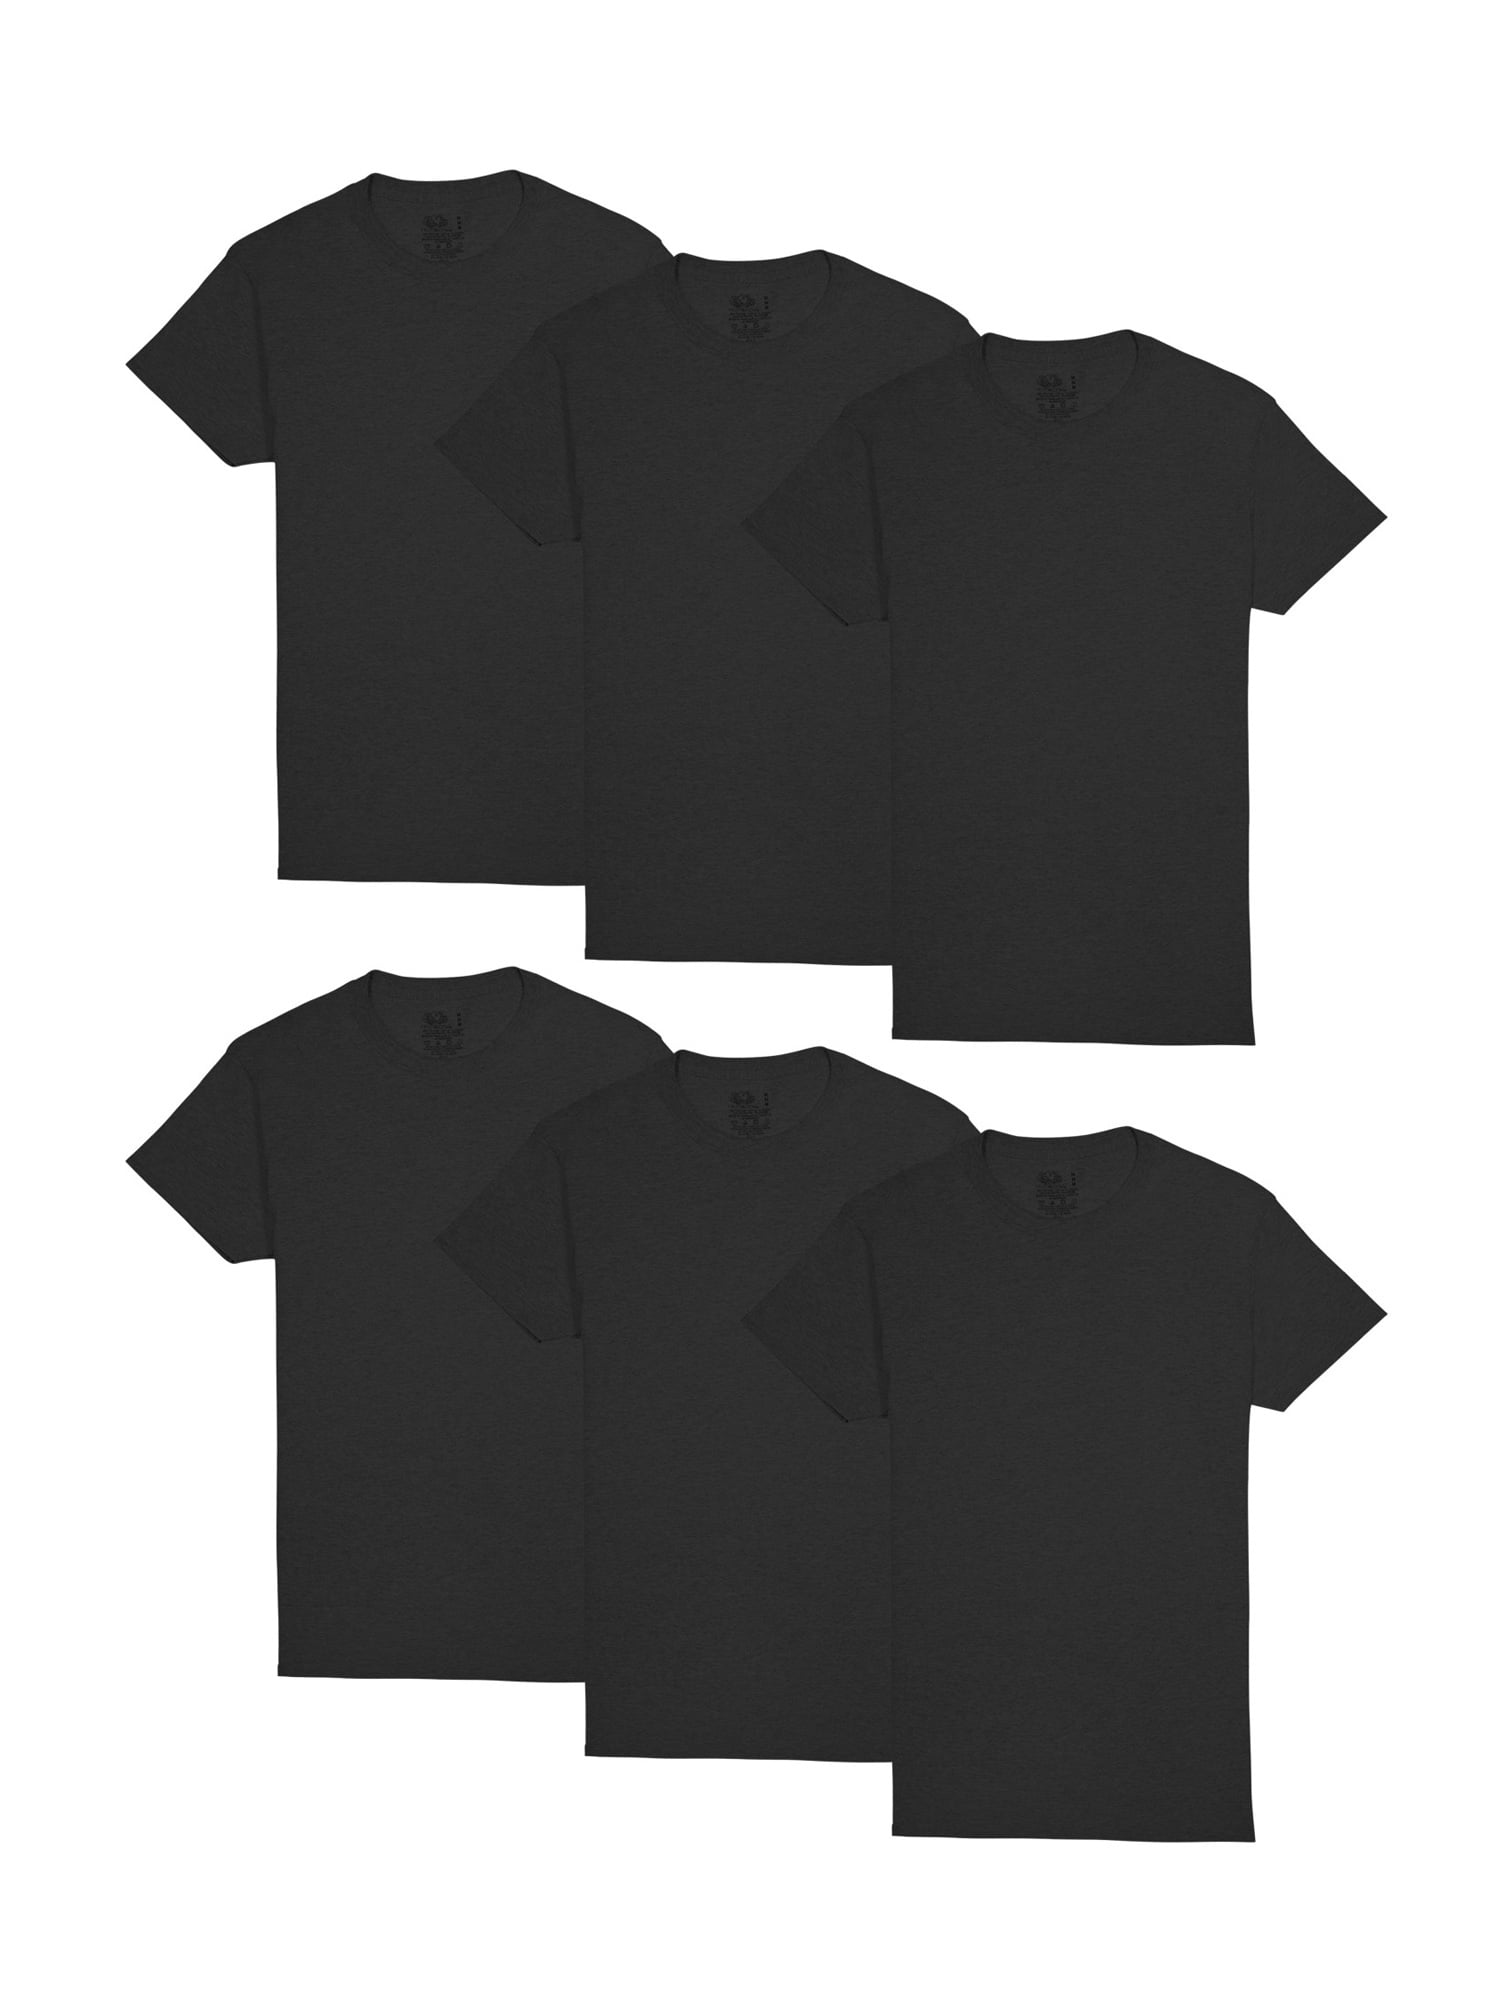 Fruit of the Loom Men's Black Crew Undershirts, 6 Pack, Sizes S-3XL ...